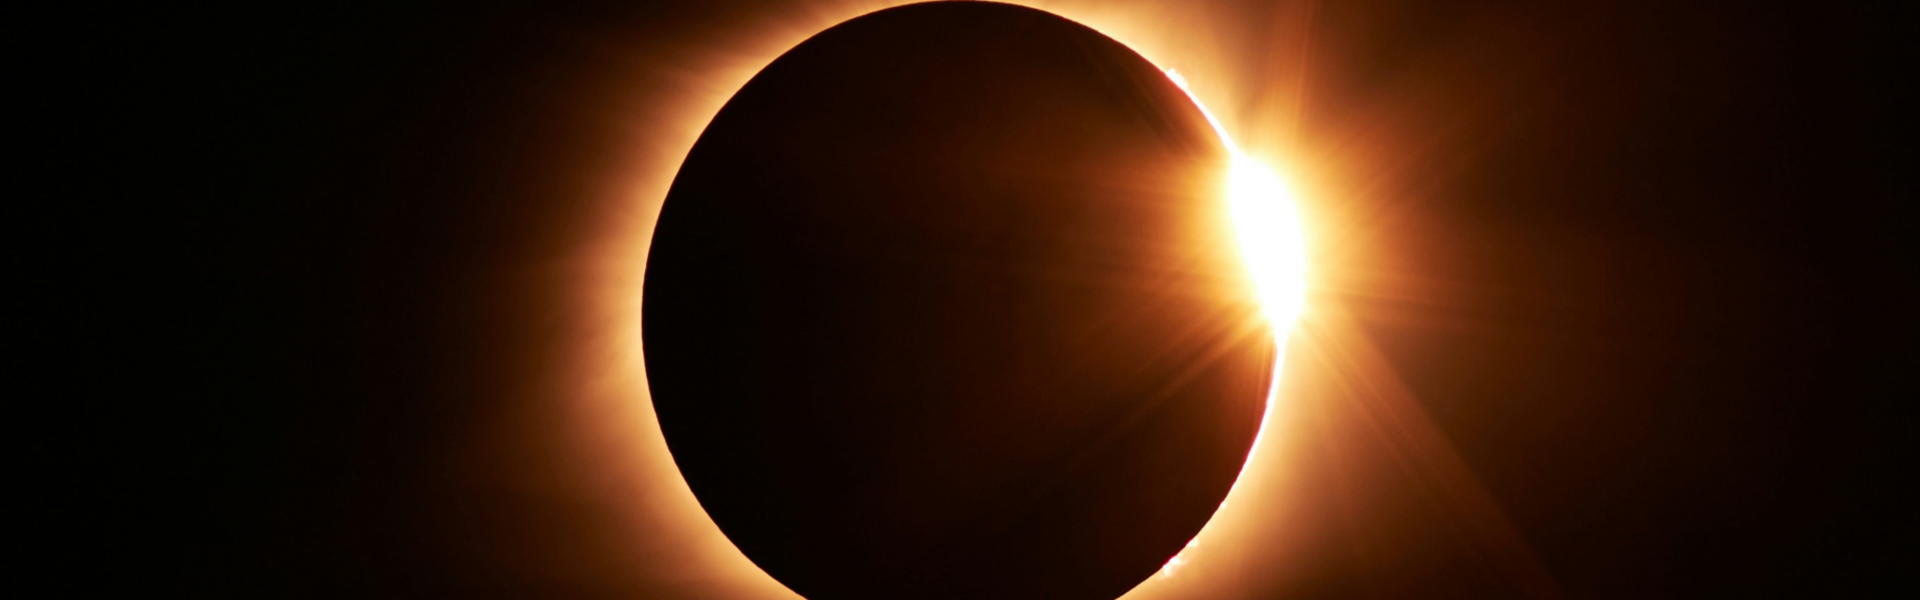 Eclipse in a dark sky, sunlight peeking behind a dark circular object